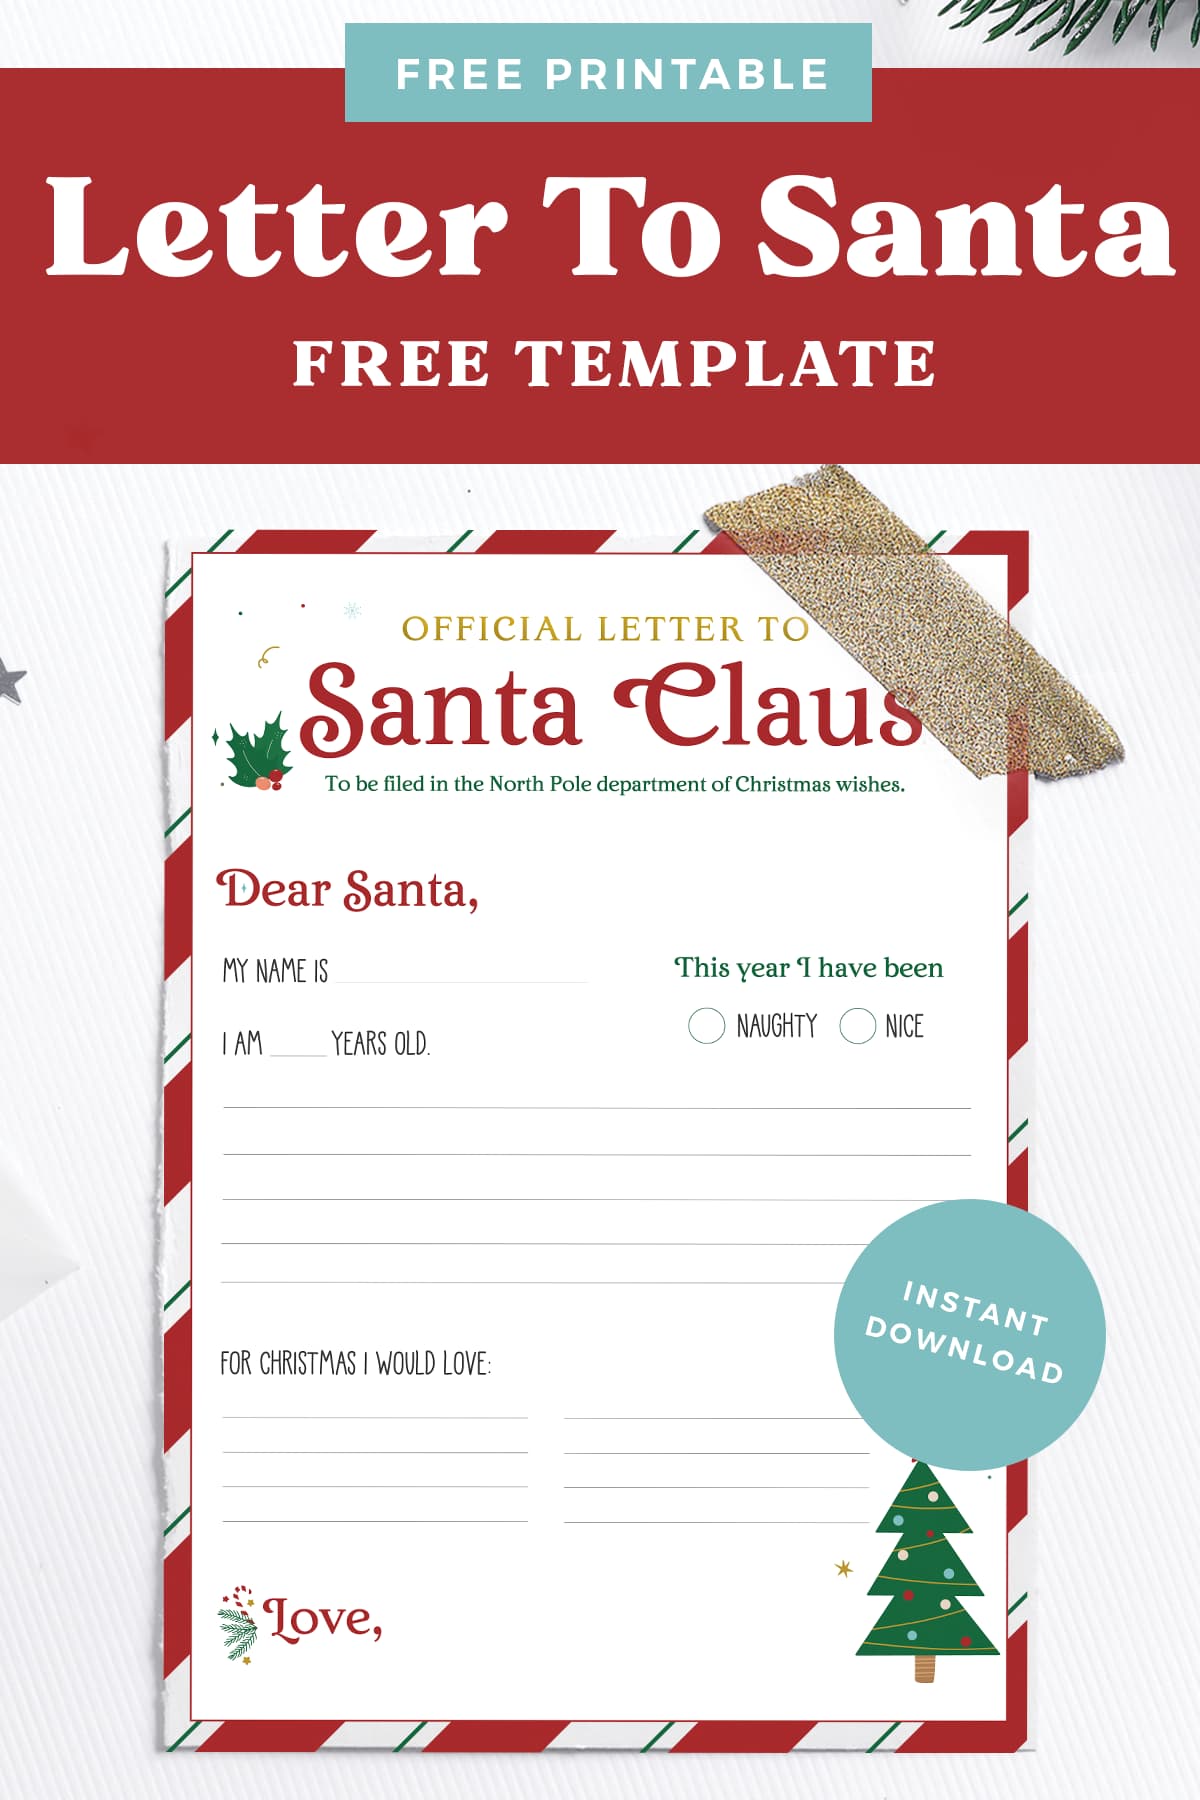 Letter to santa free printable pin preview.